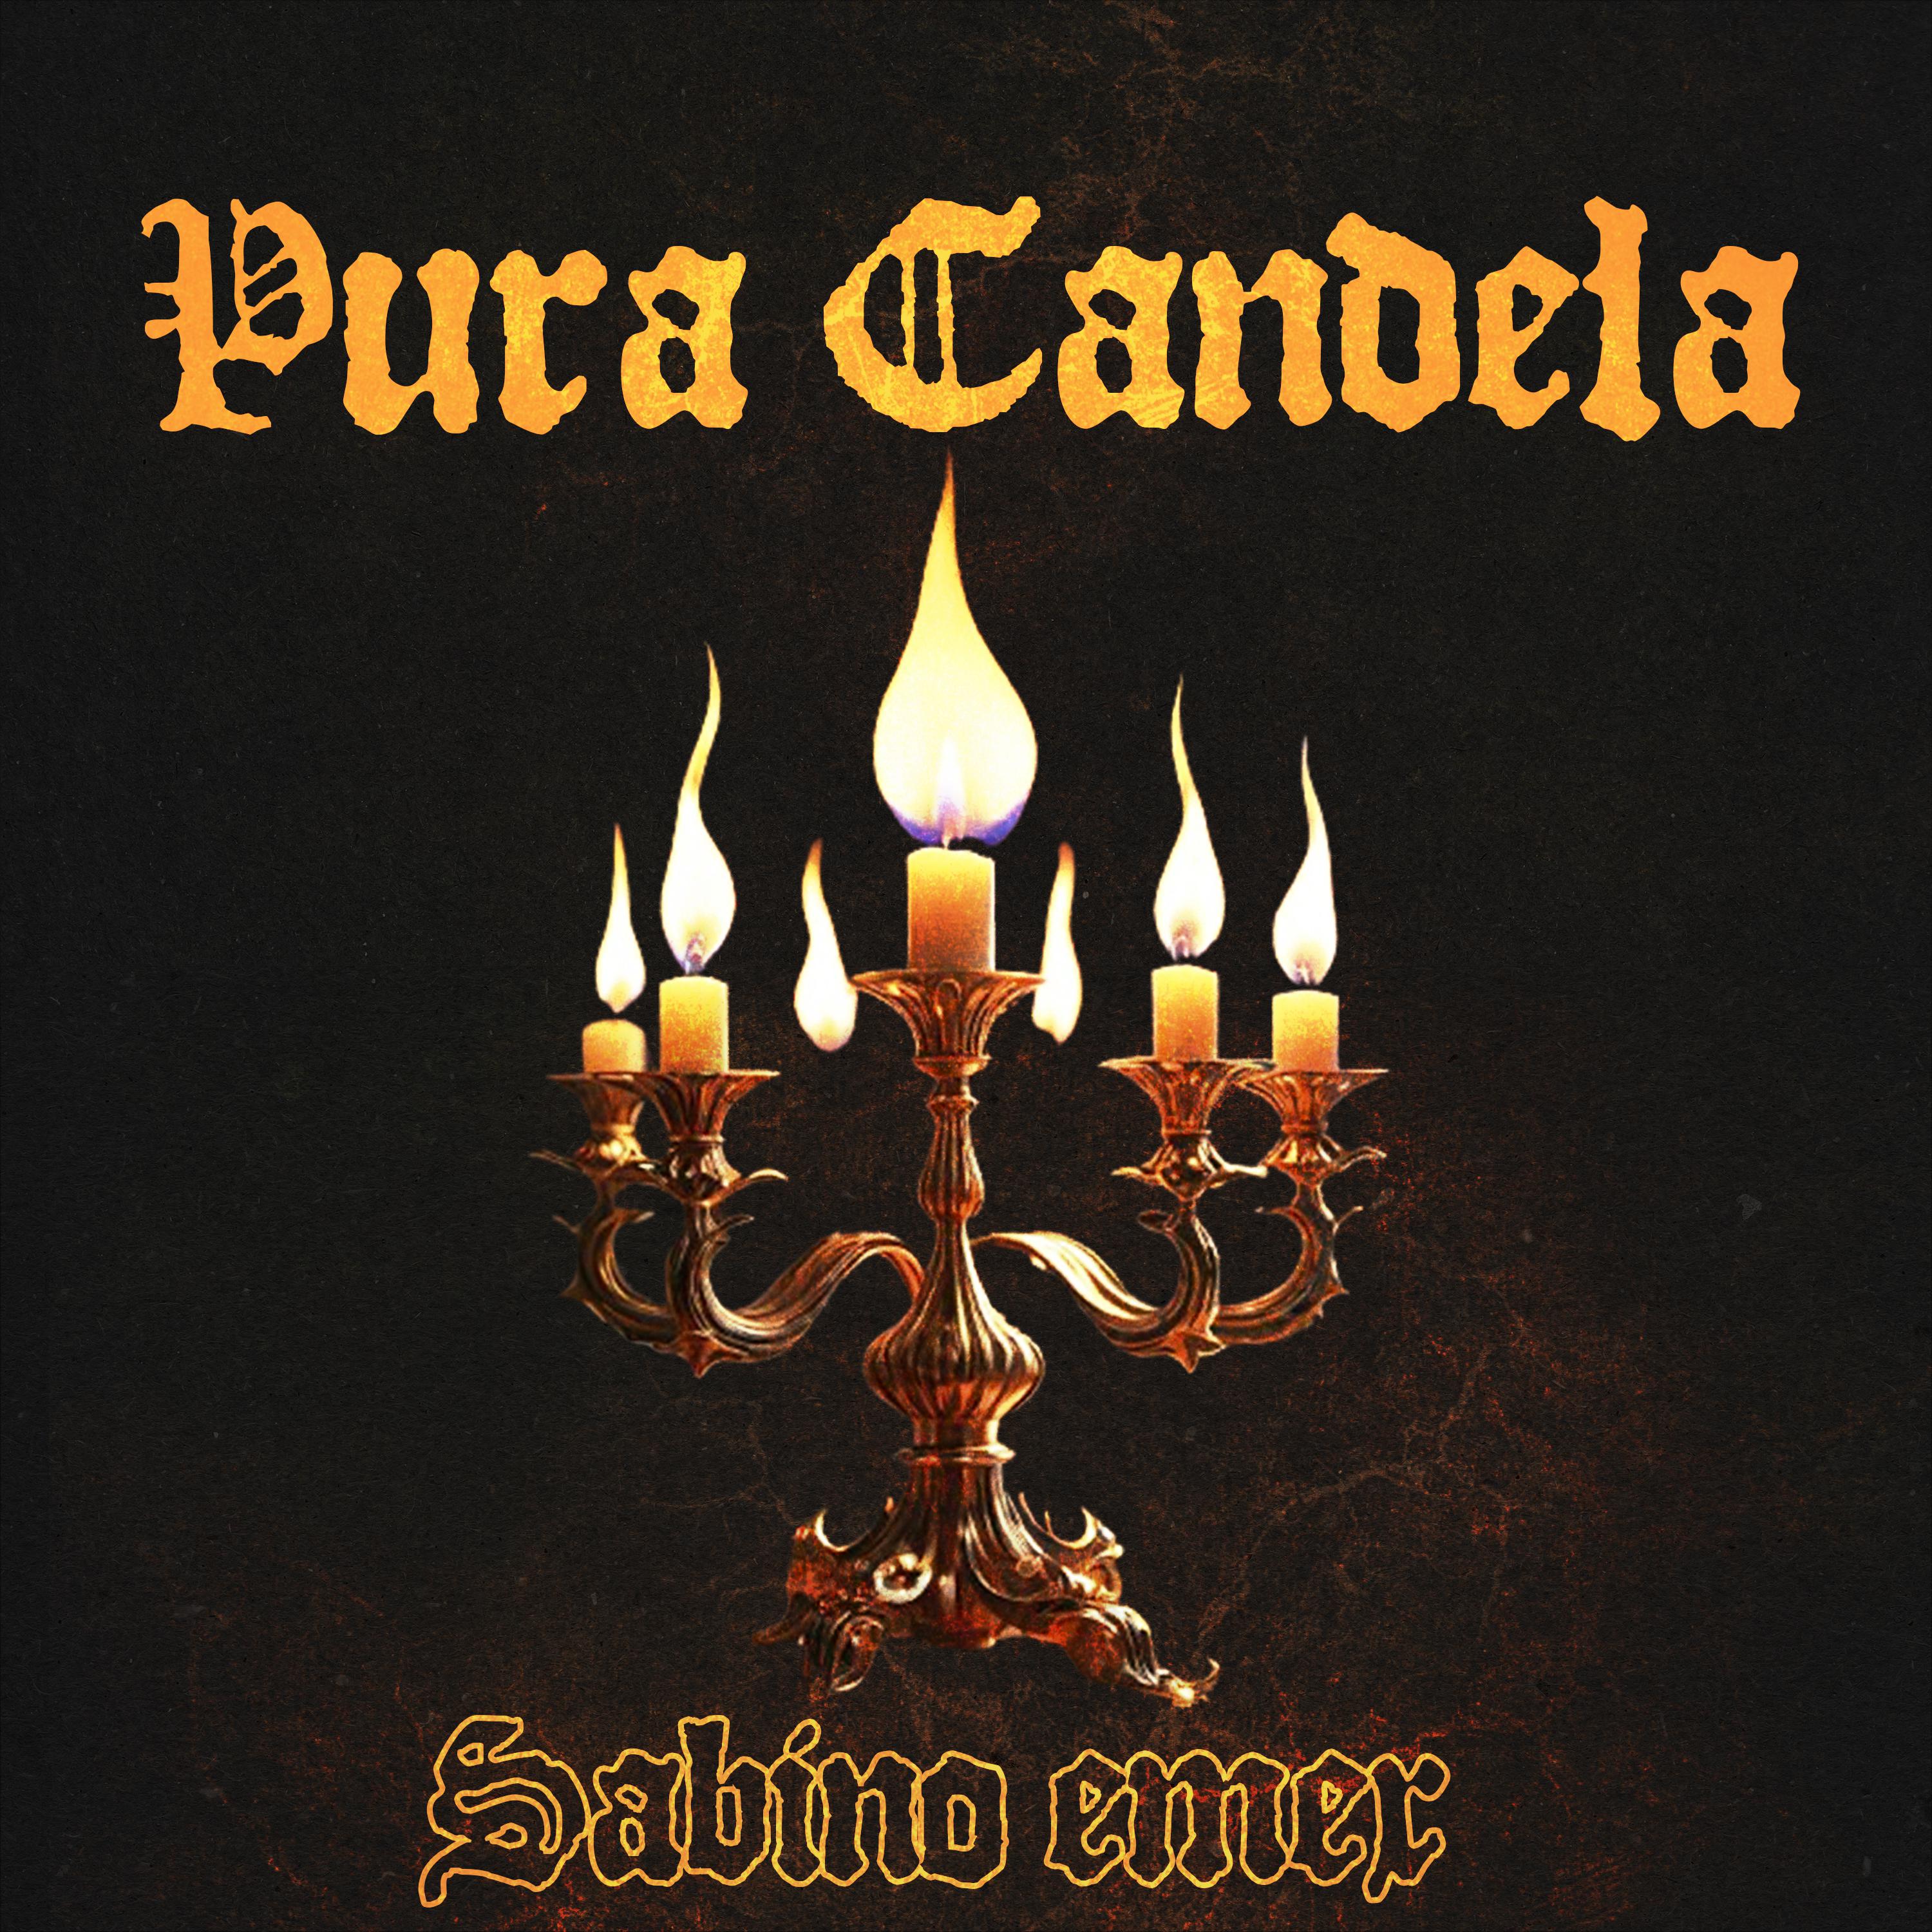 Постер альбома Pura Candela